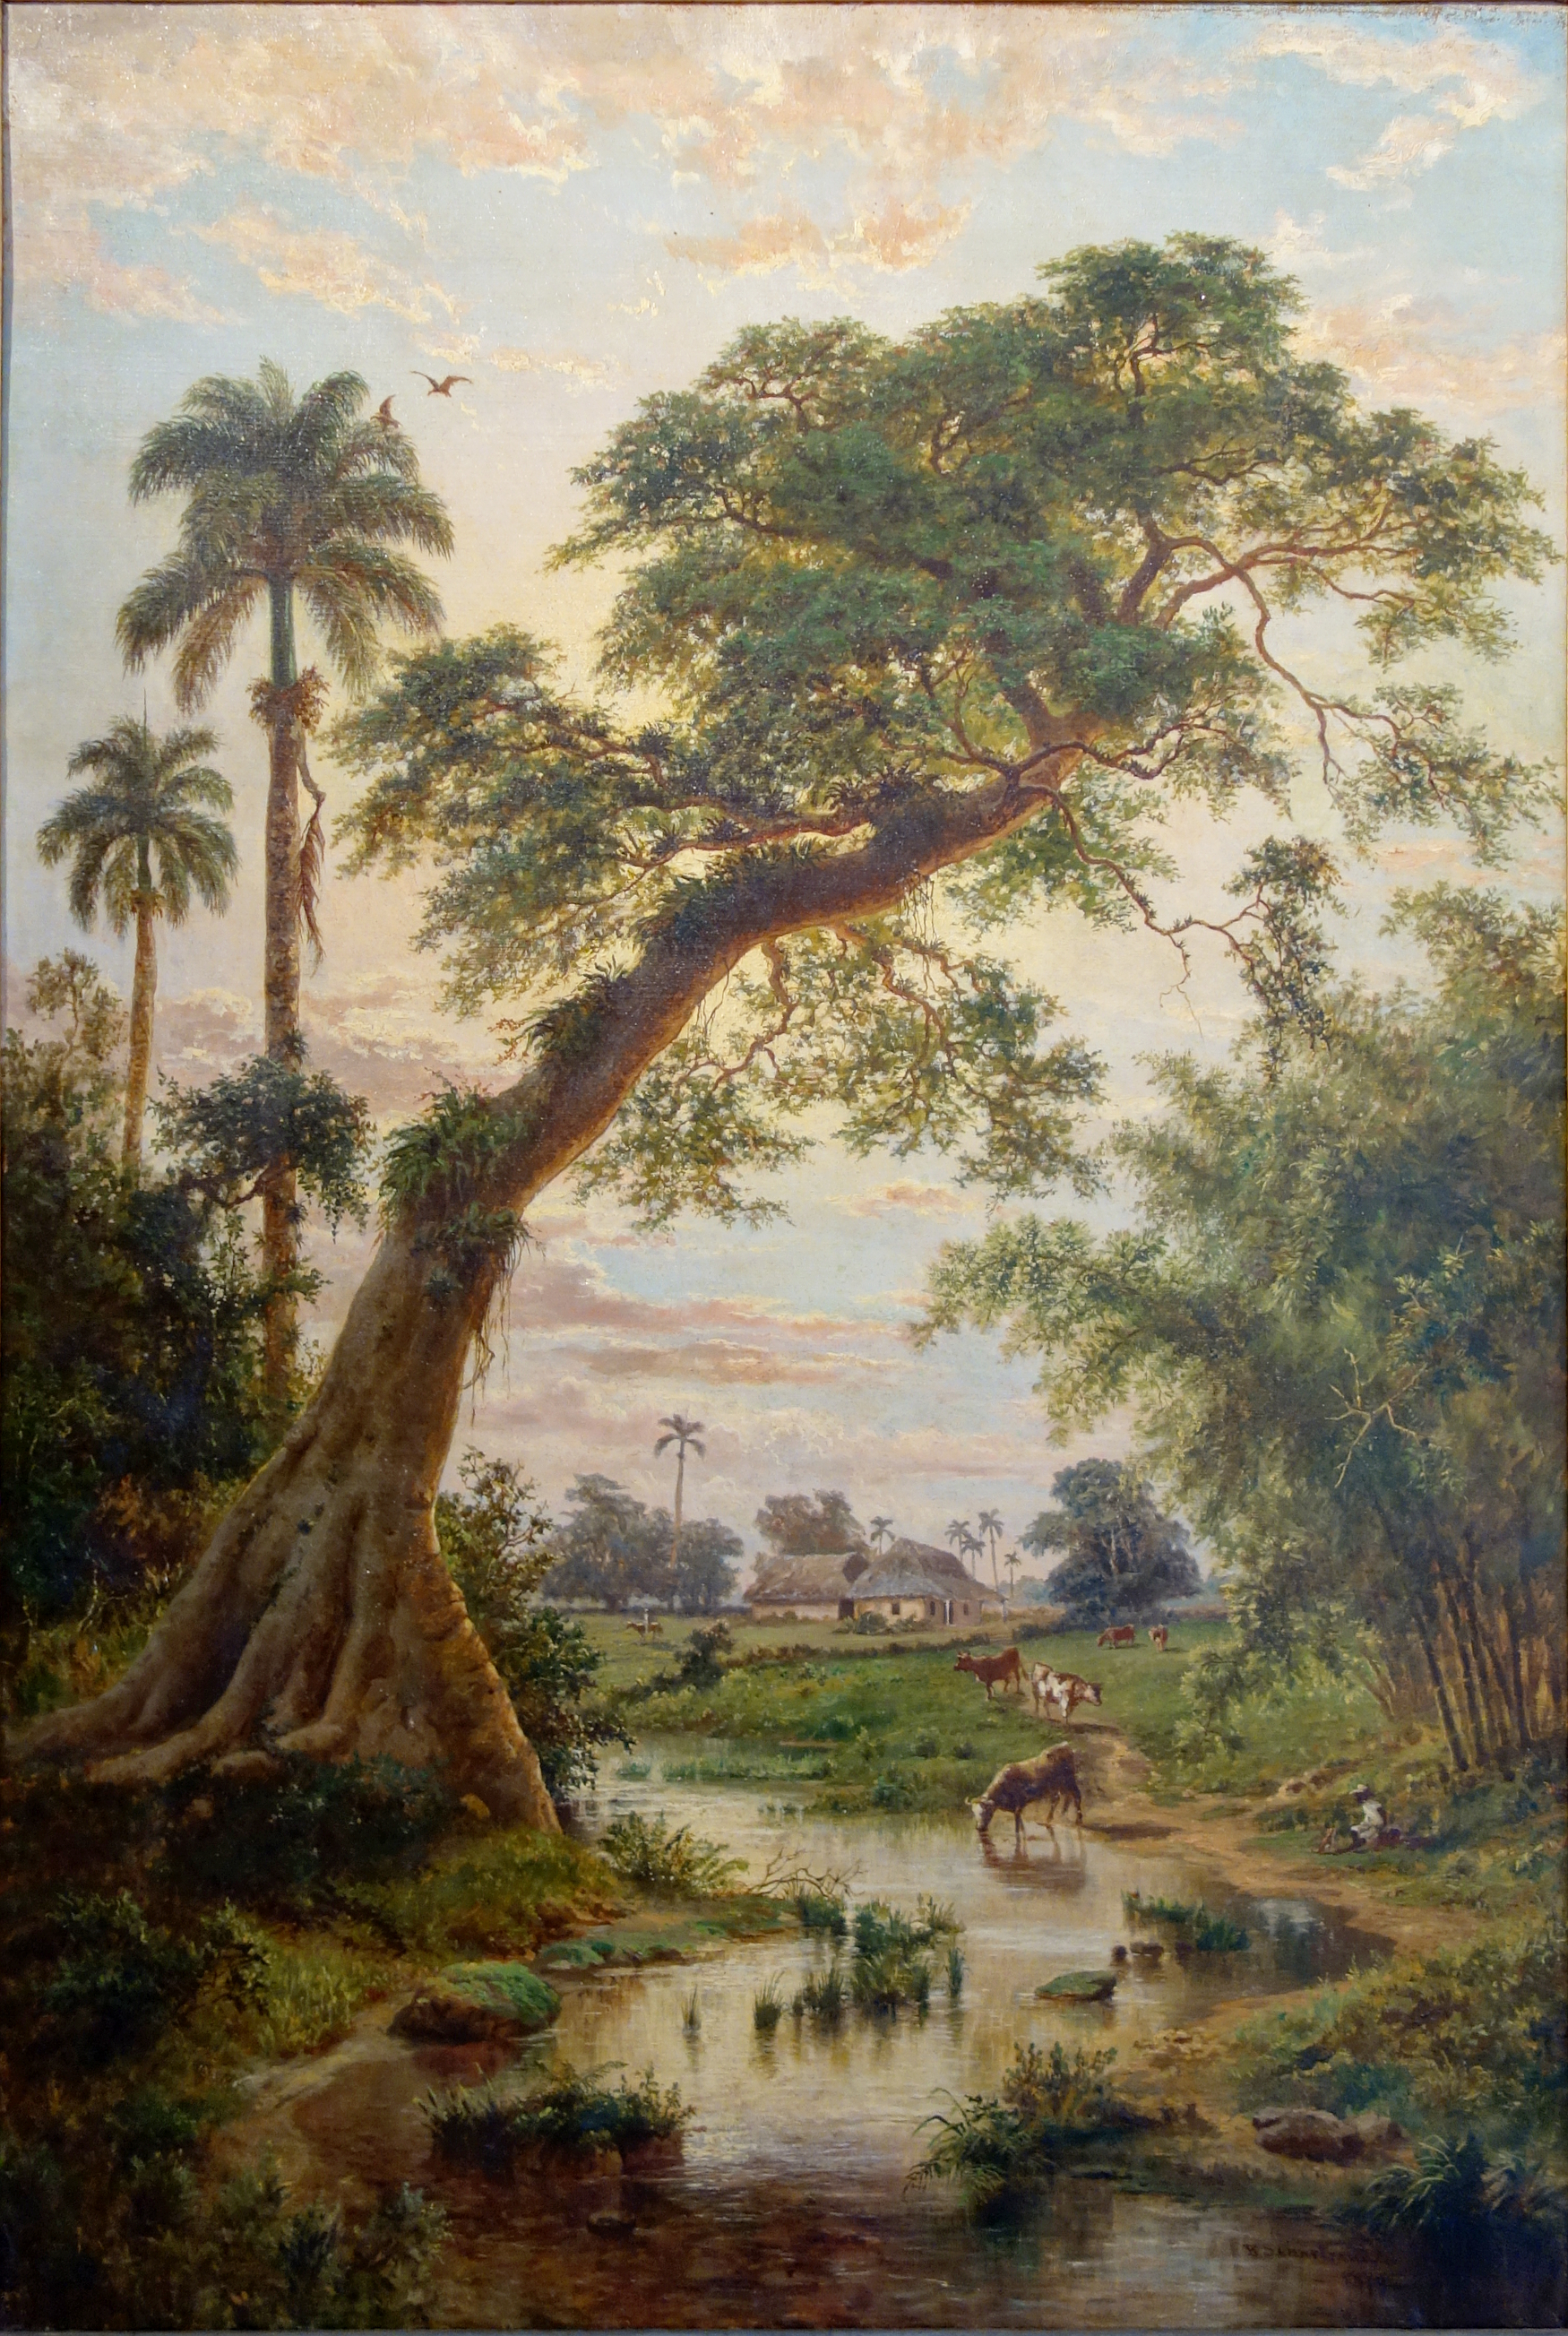 Esteban Chartrand, Cuban Landscape, 1879, oil on canvas